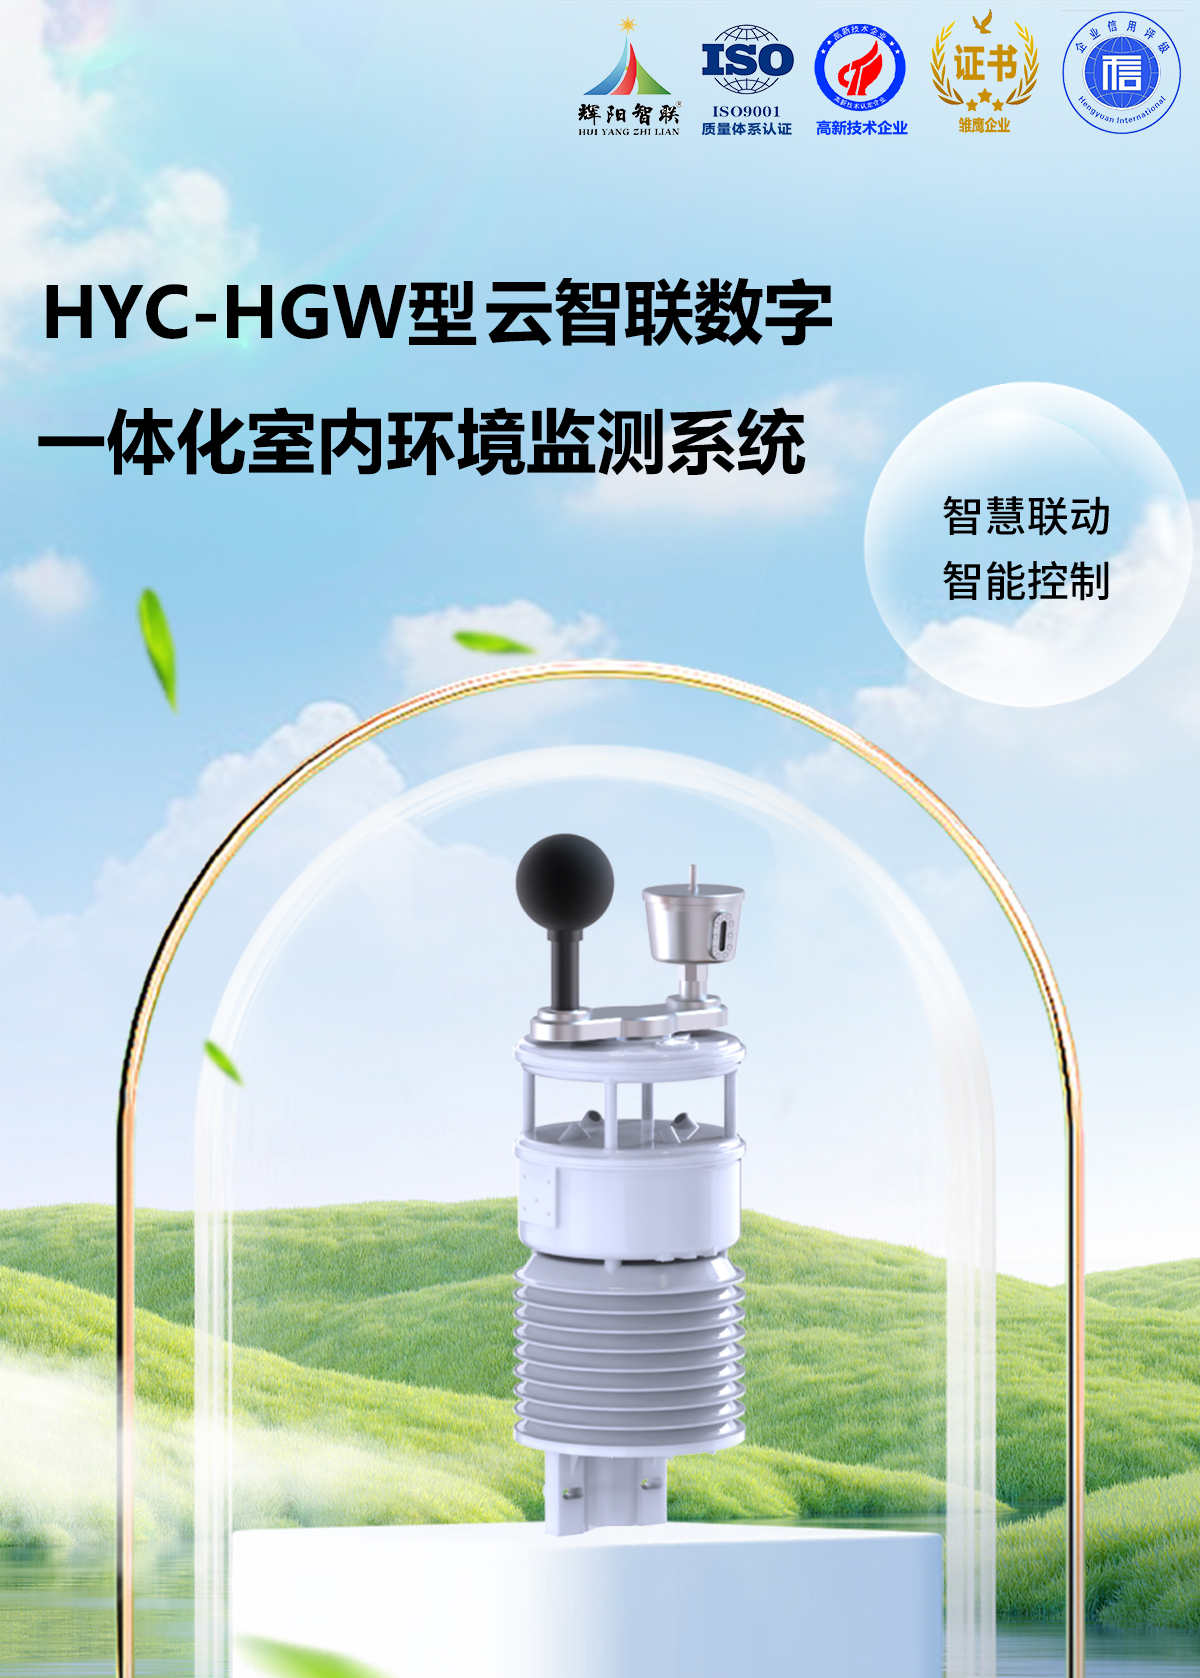 HYC-HGW型室内环境监测系统